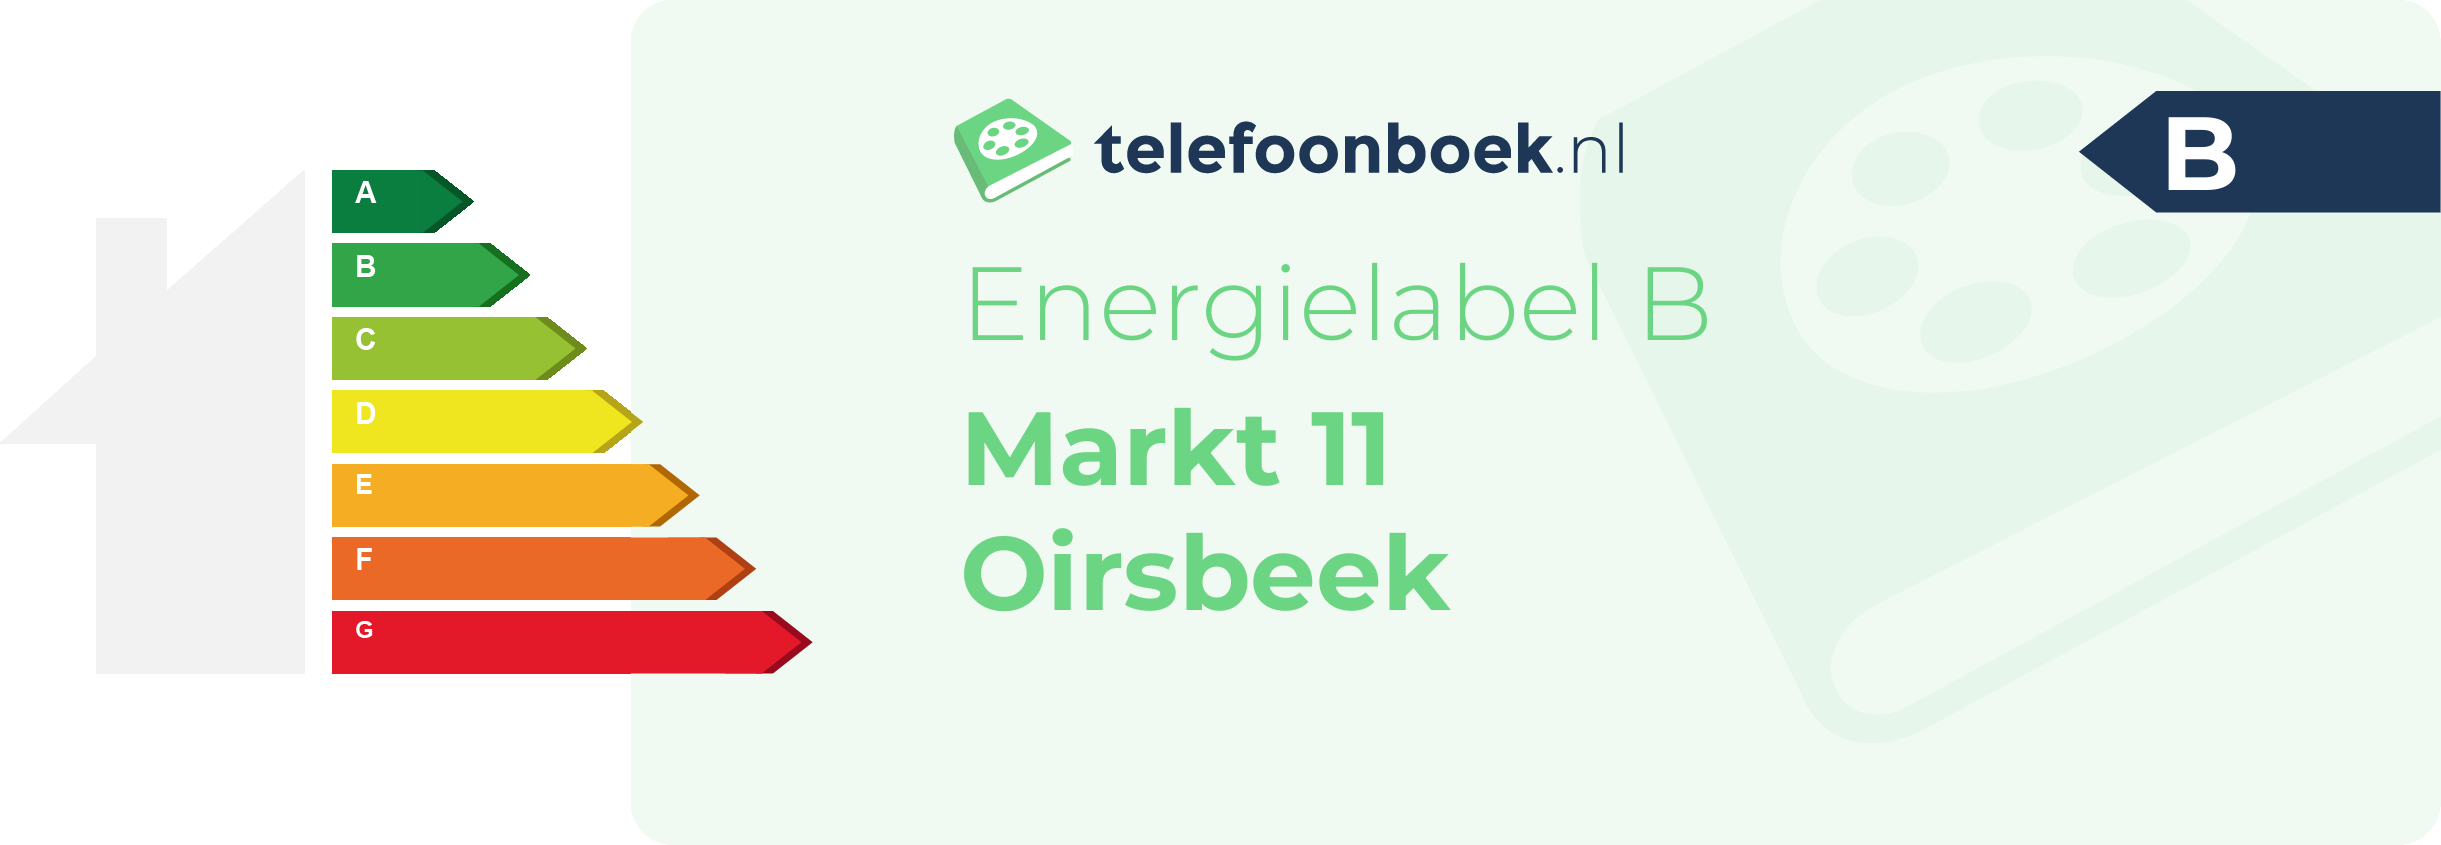 Energielabel Markt 11 Oirsbeek